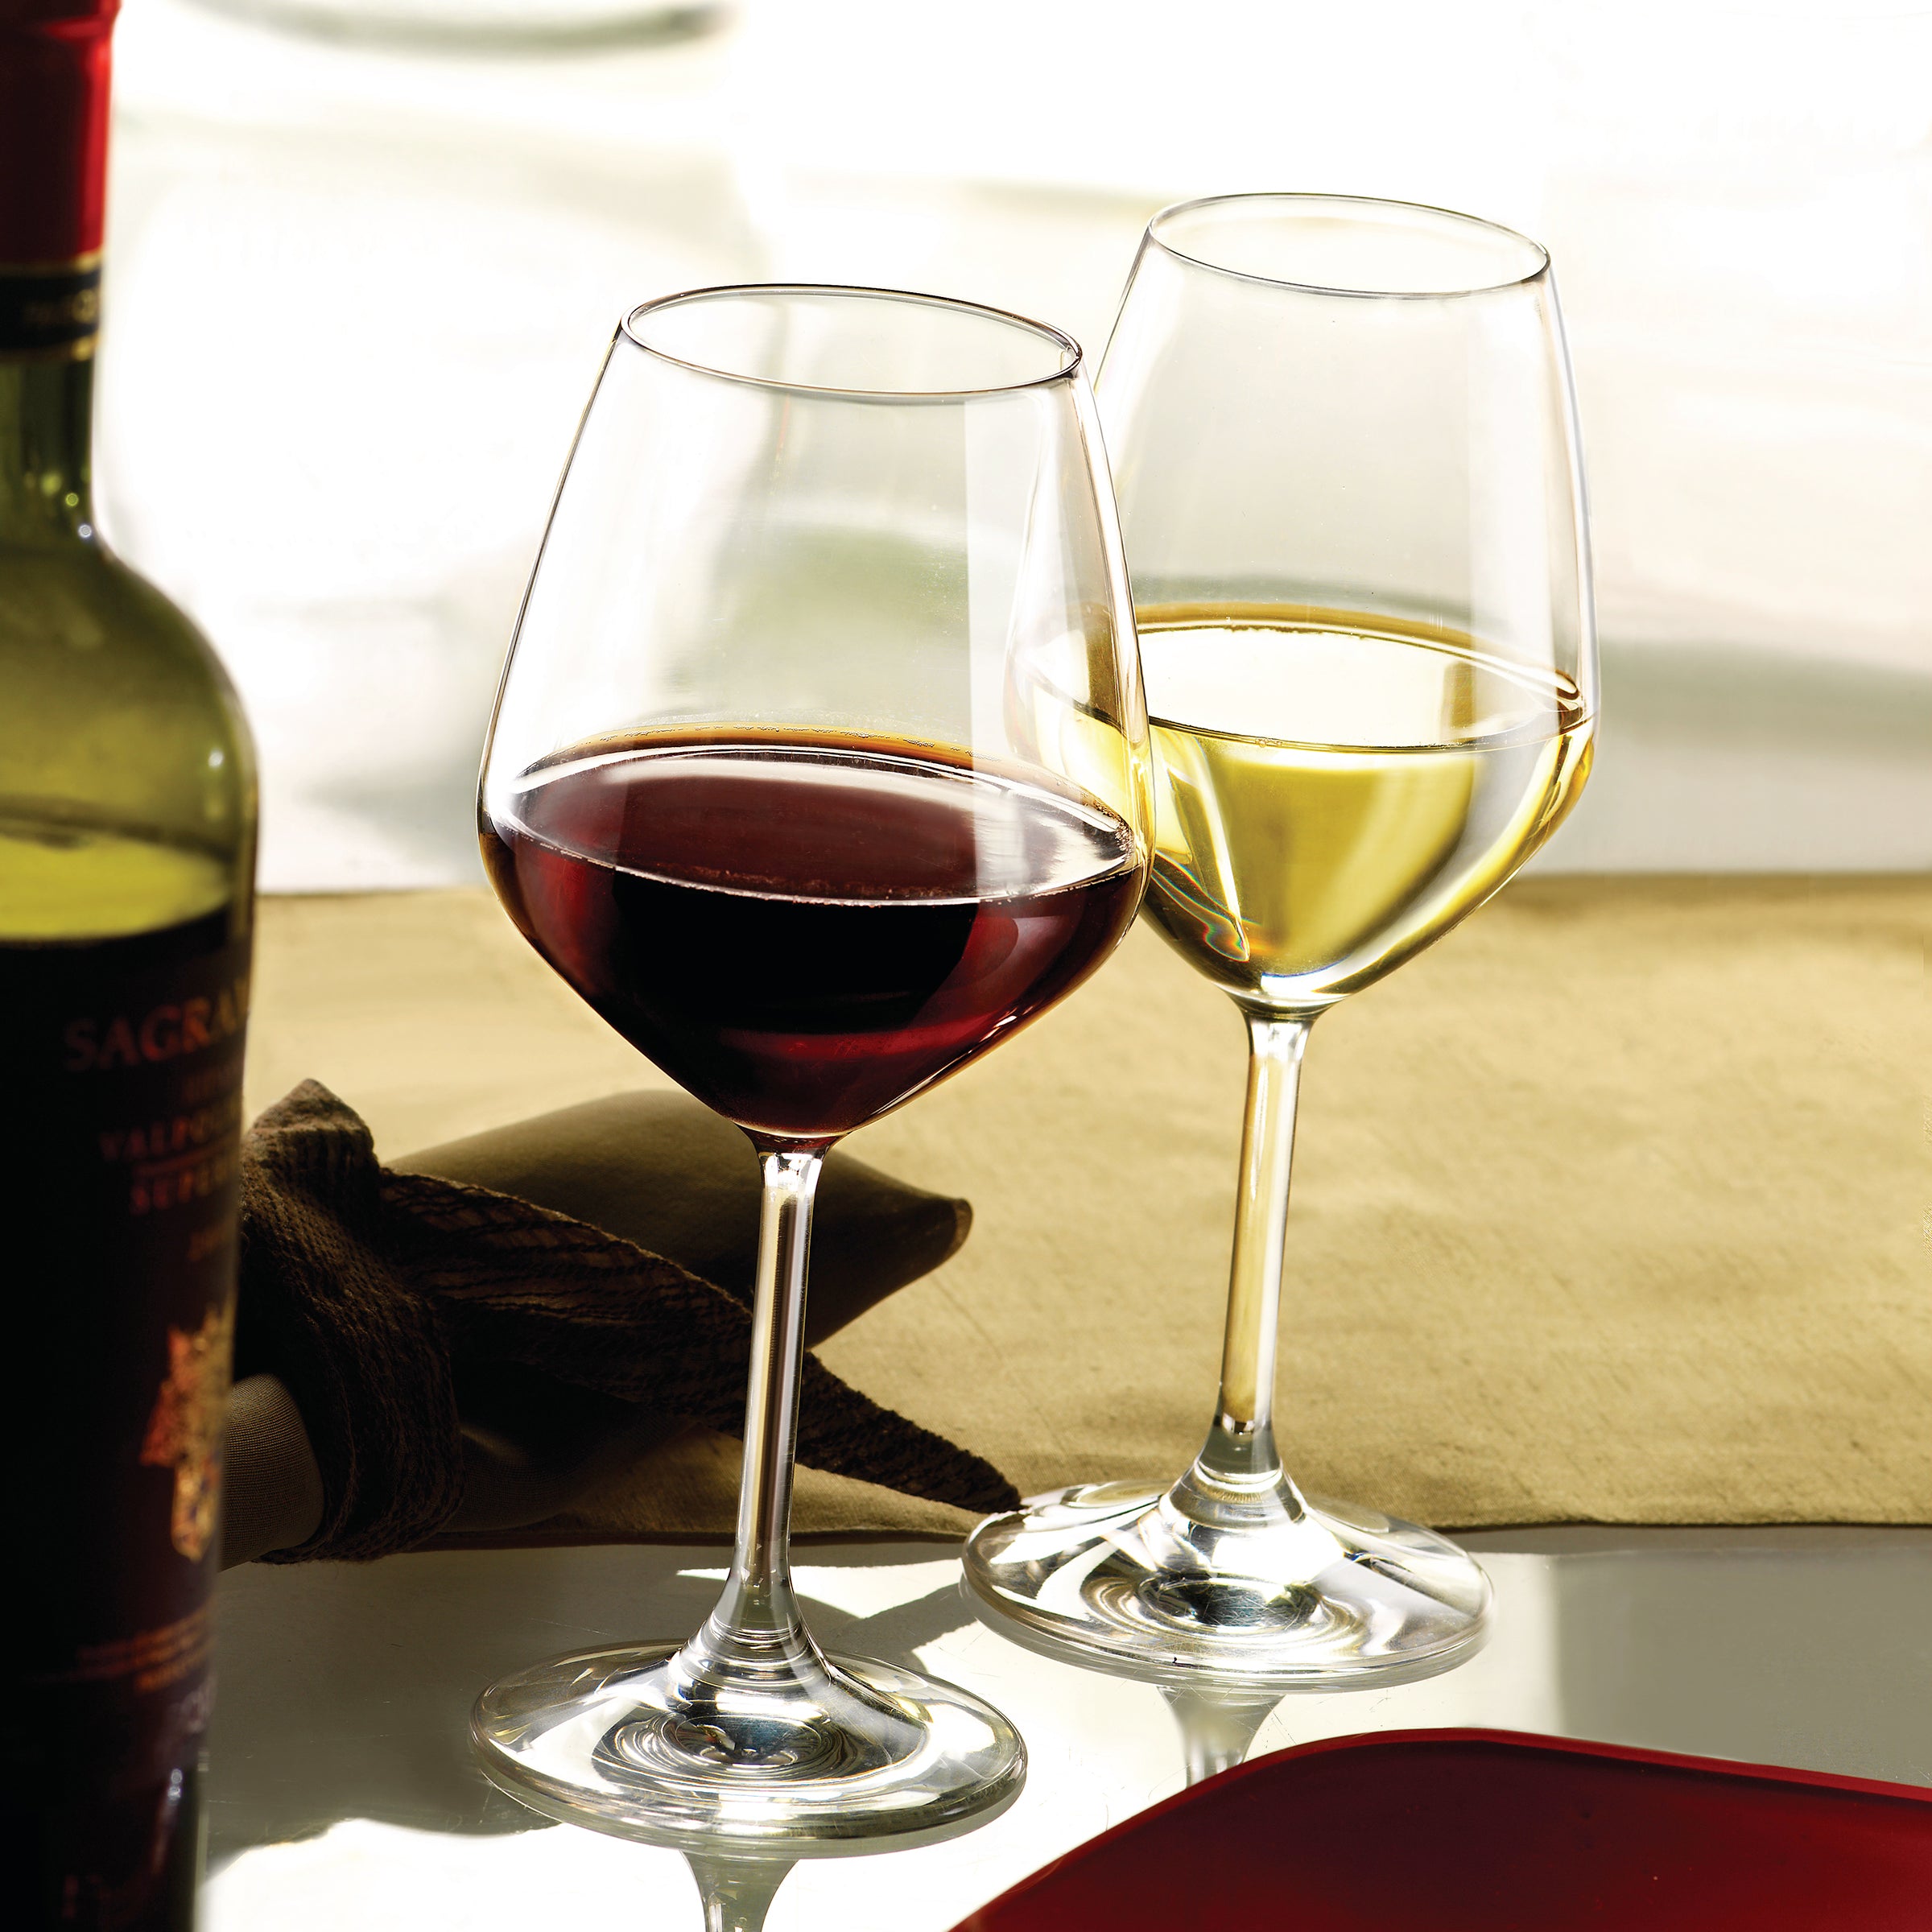 Bormioli Rocco 18 oz Red Wine Glasses, Crystal Clear Star Glass